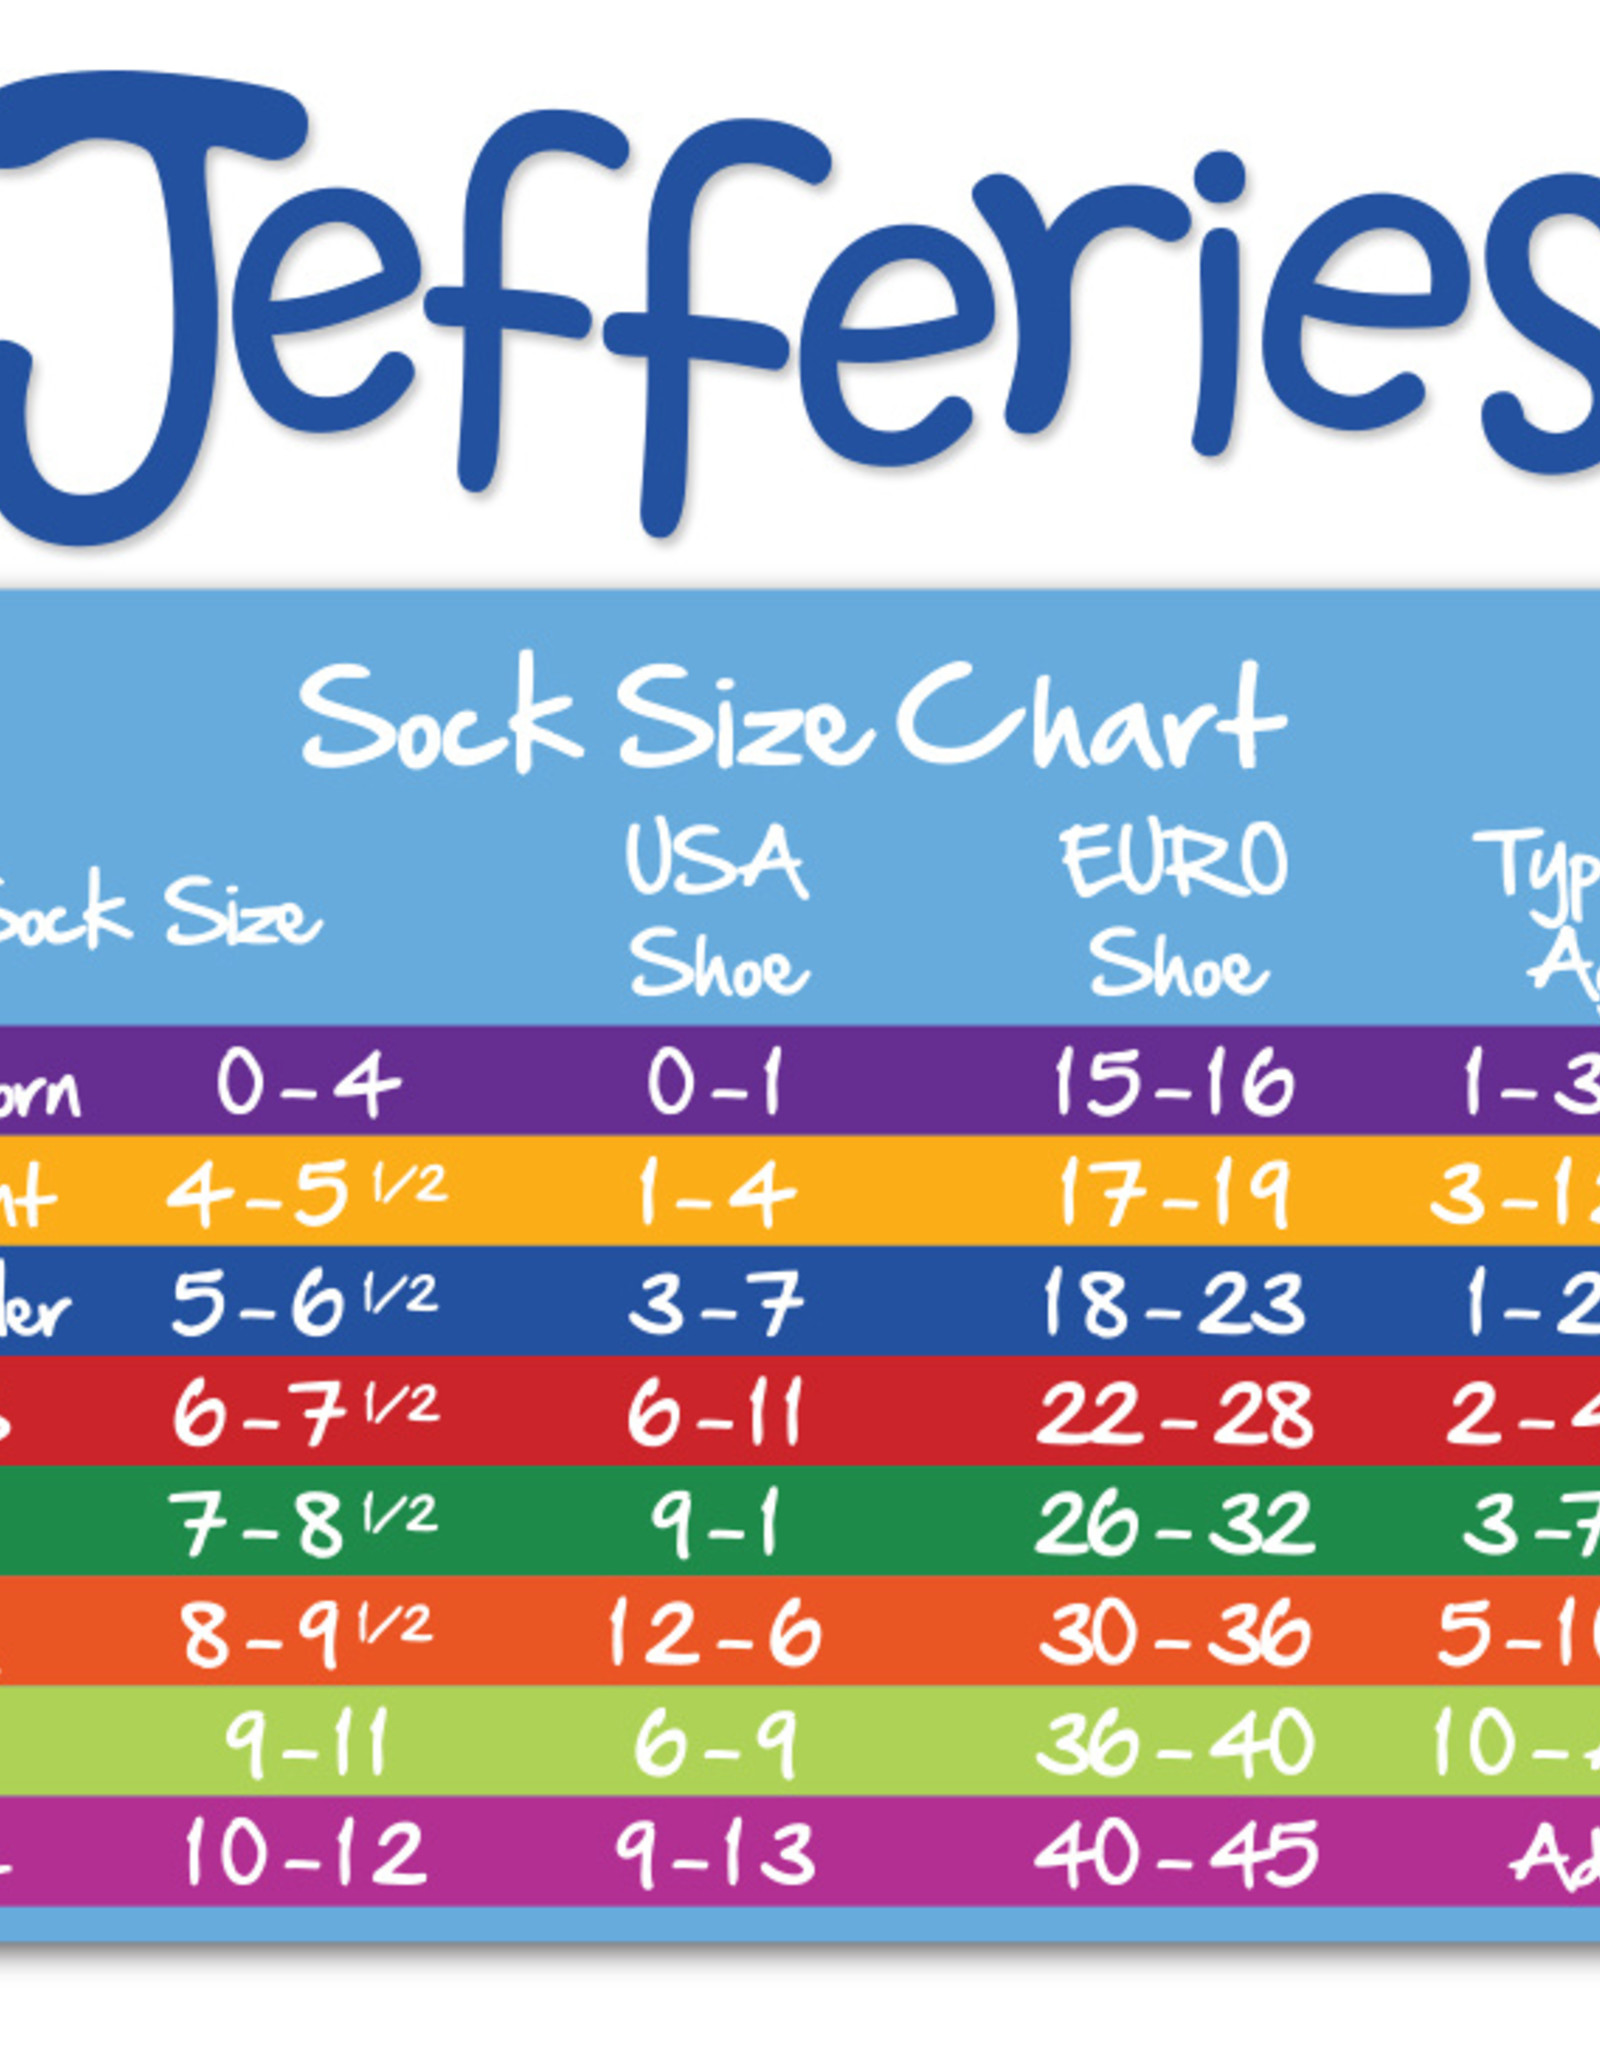 Jefferies 62130 6-Pack Socks